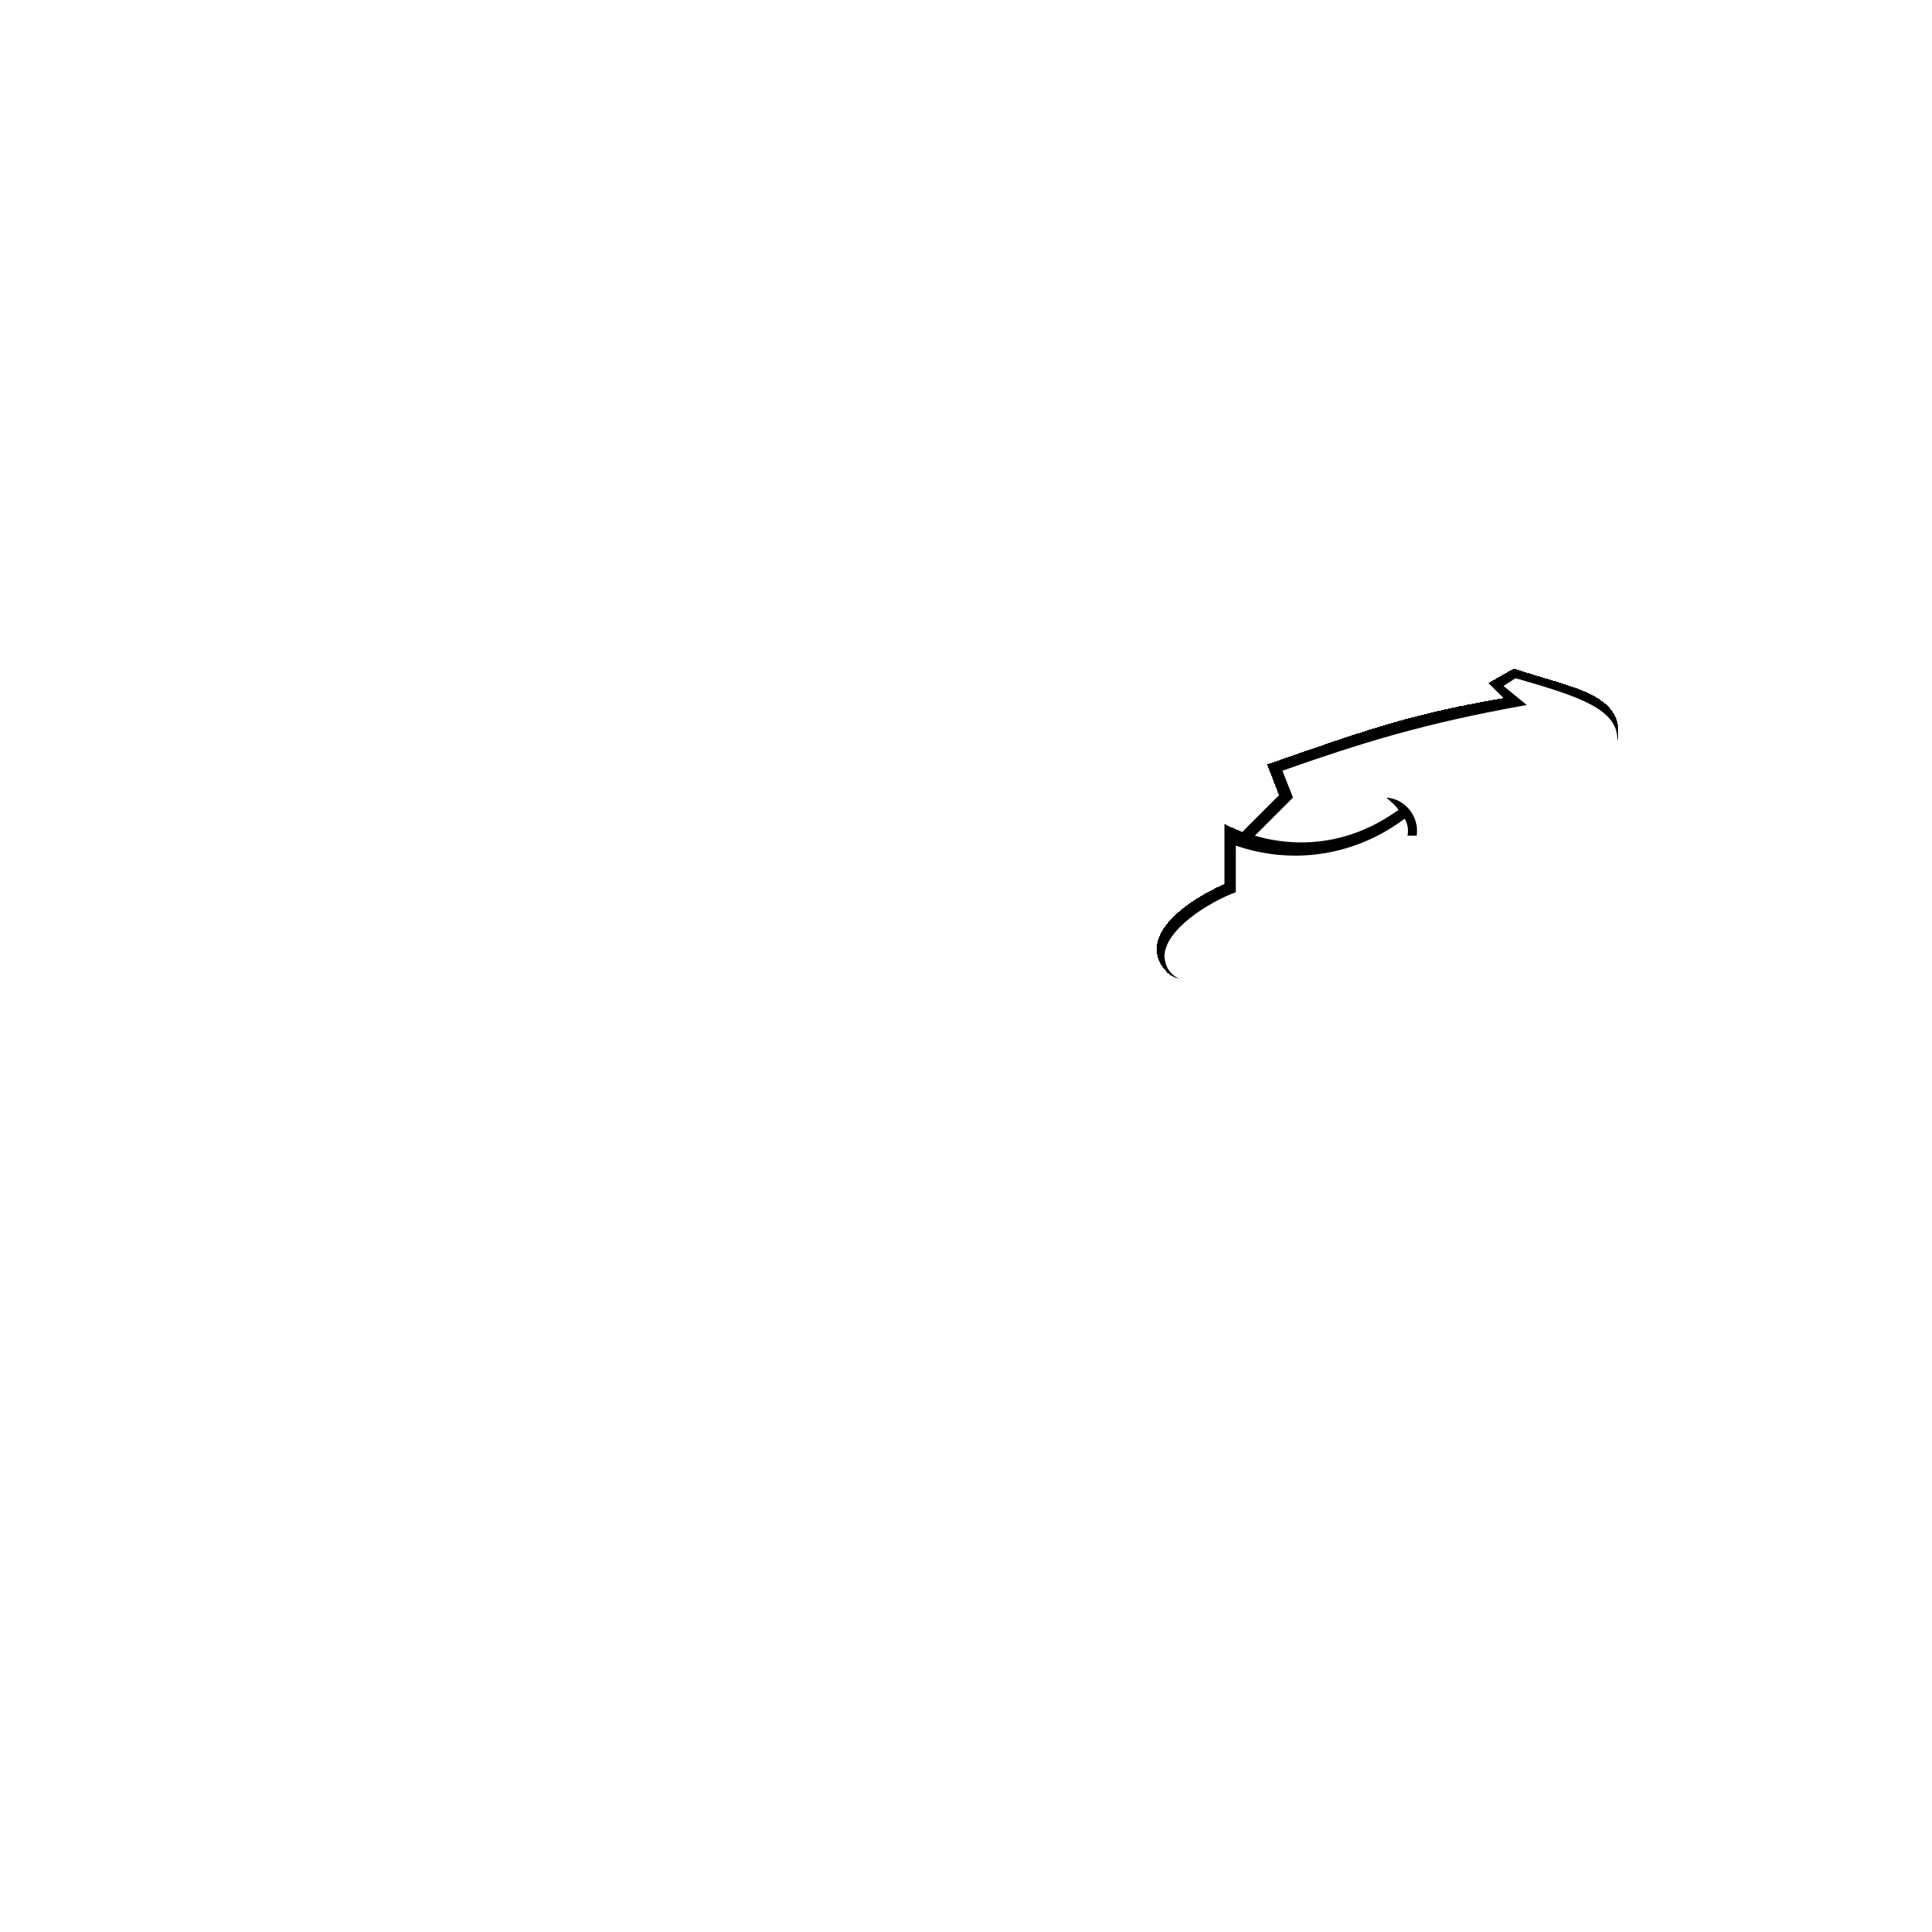 Alibaba.com Logo - Alibaba com 2 Logo PNG Transparent & SVG Vector